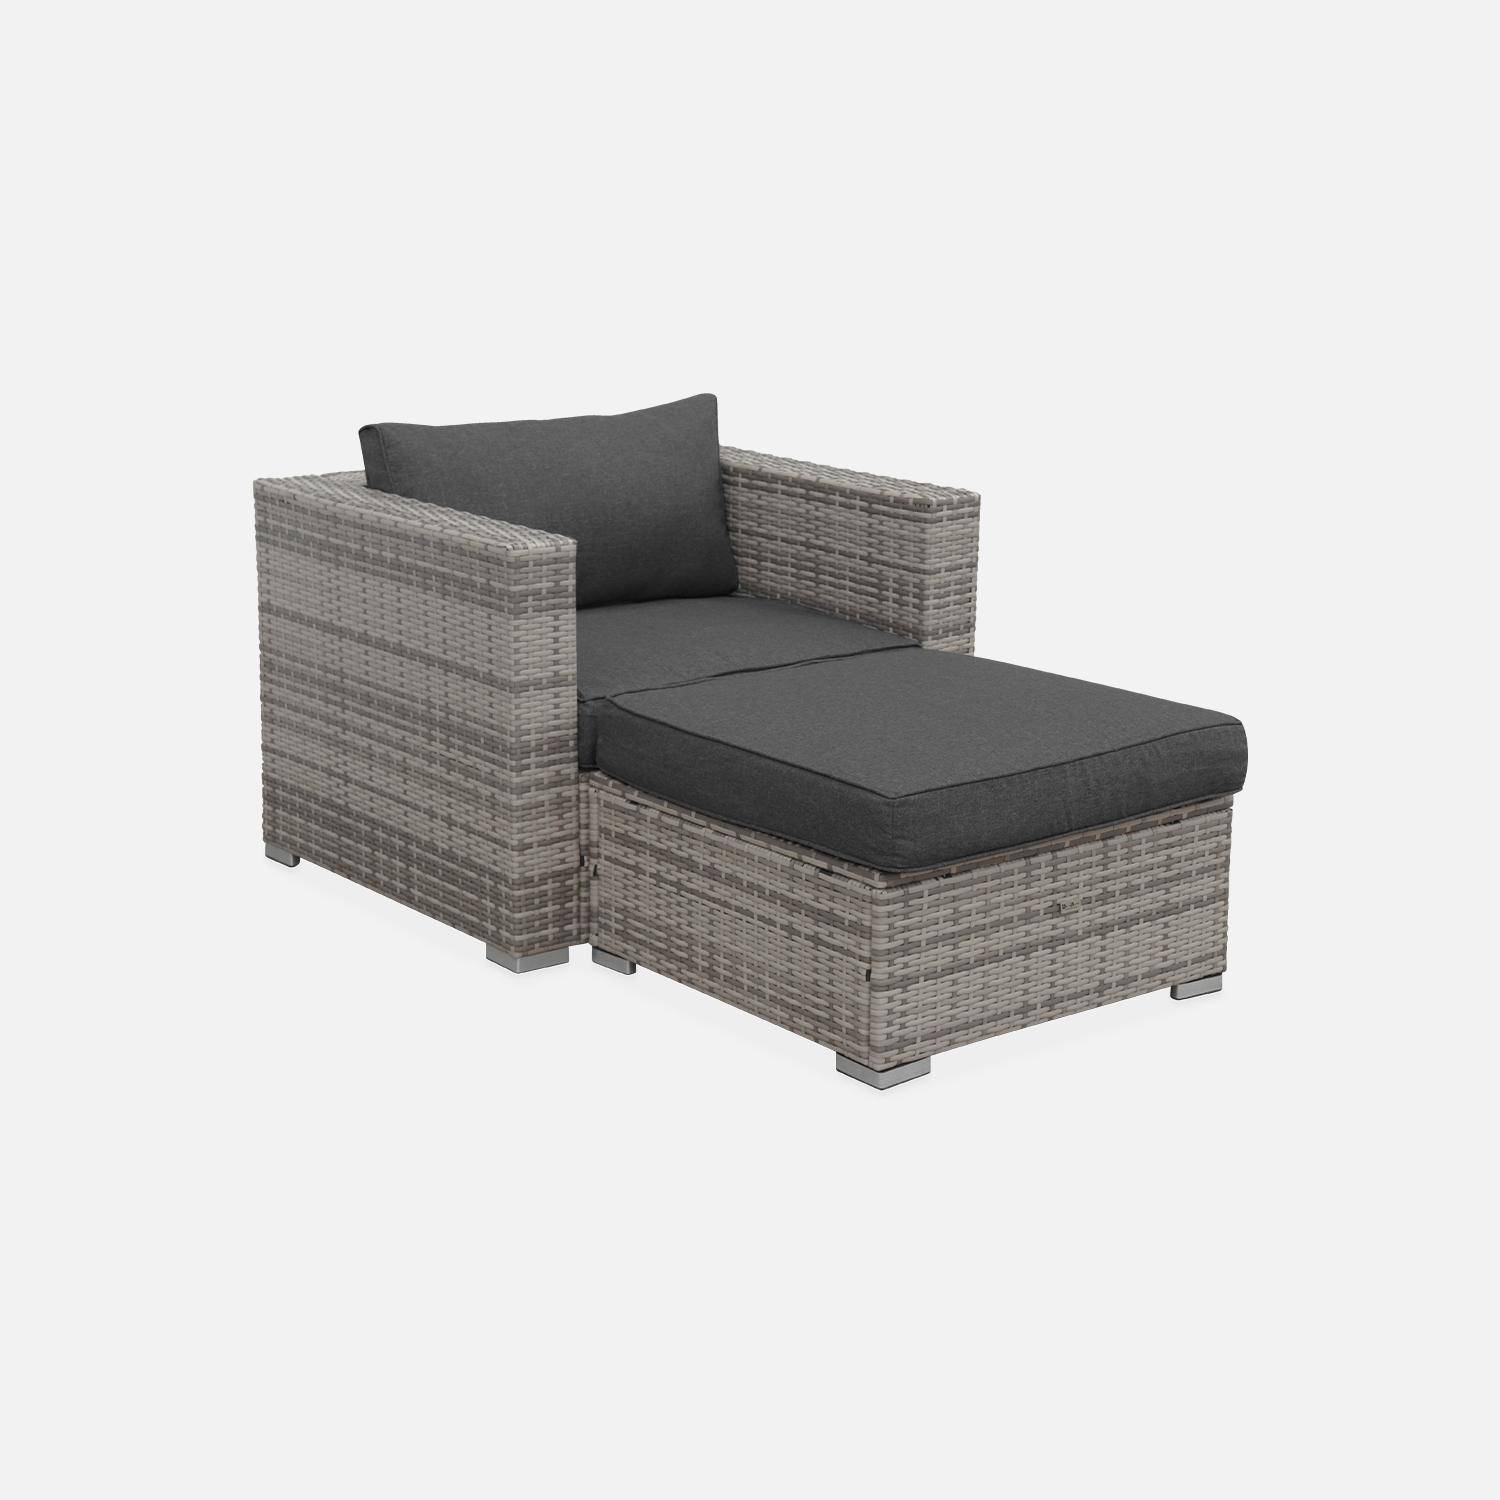 Garden sofa sets - armchair and footstool in rattan - Genova -  Mixed Grey rattan, Grey cushions Photo2